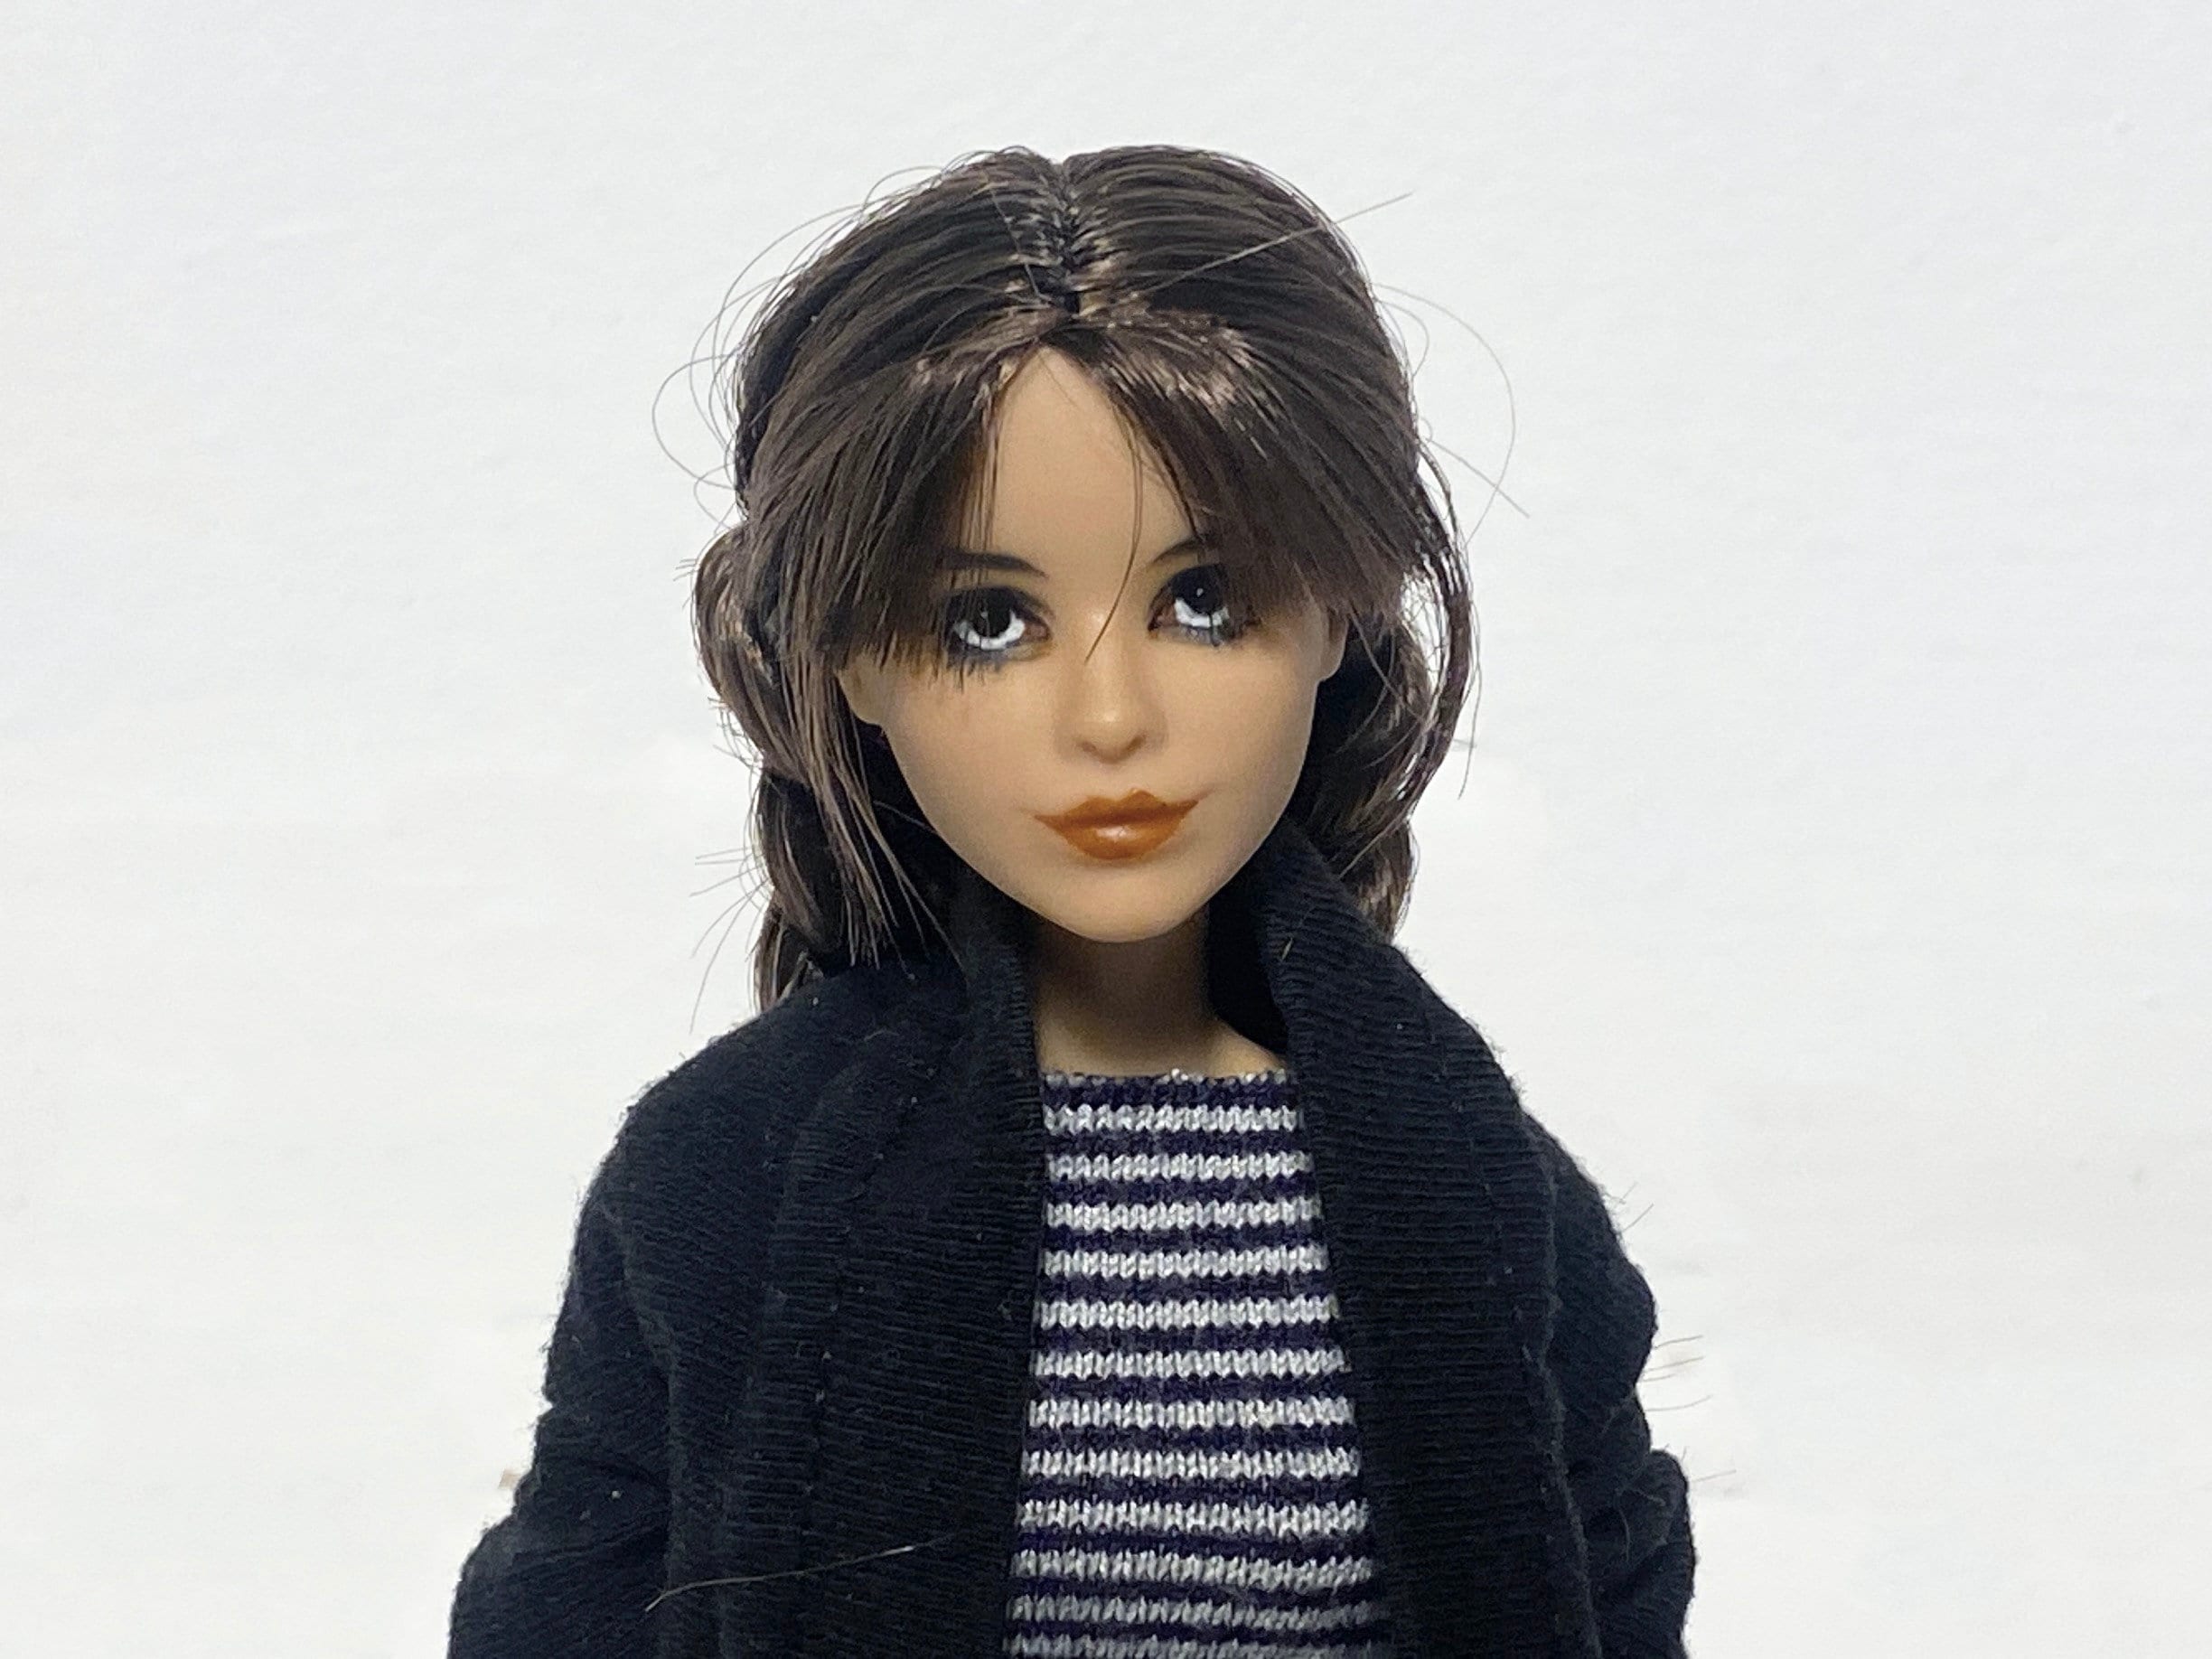 Wednesday Addams Custom Doll Version bal, OOAK, Édition limitée, Barbie  Doll Repaint -  Canada